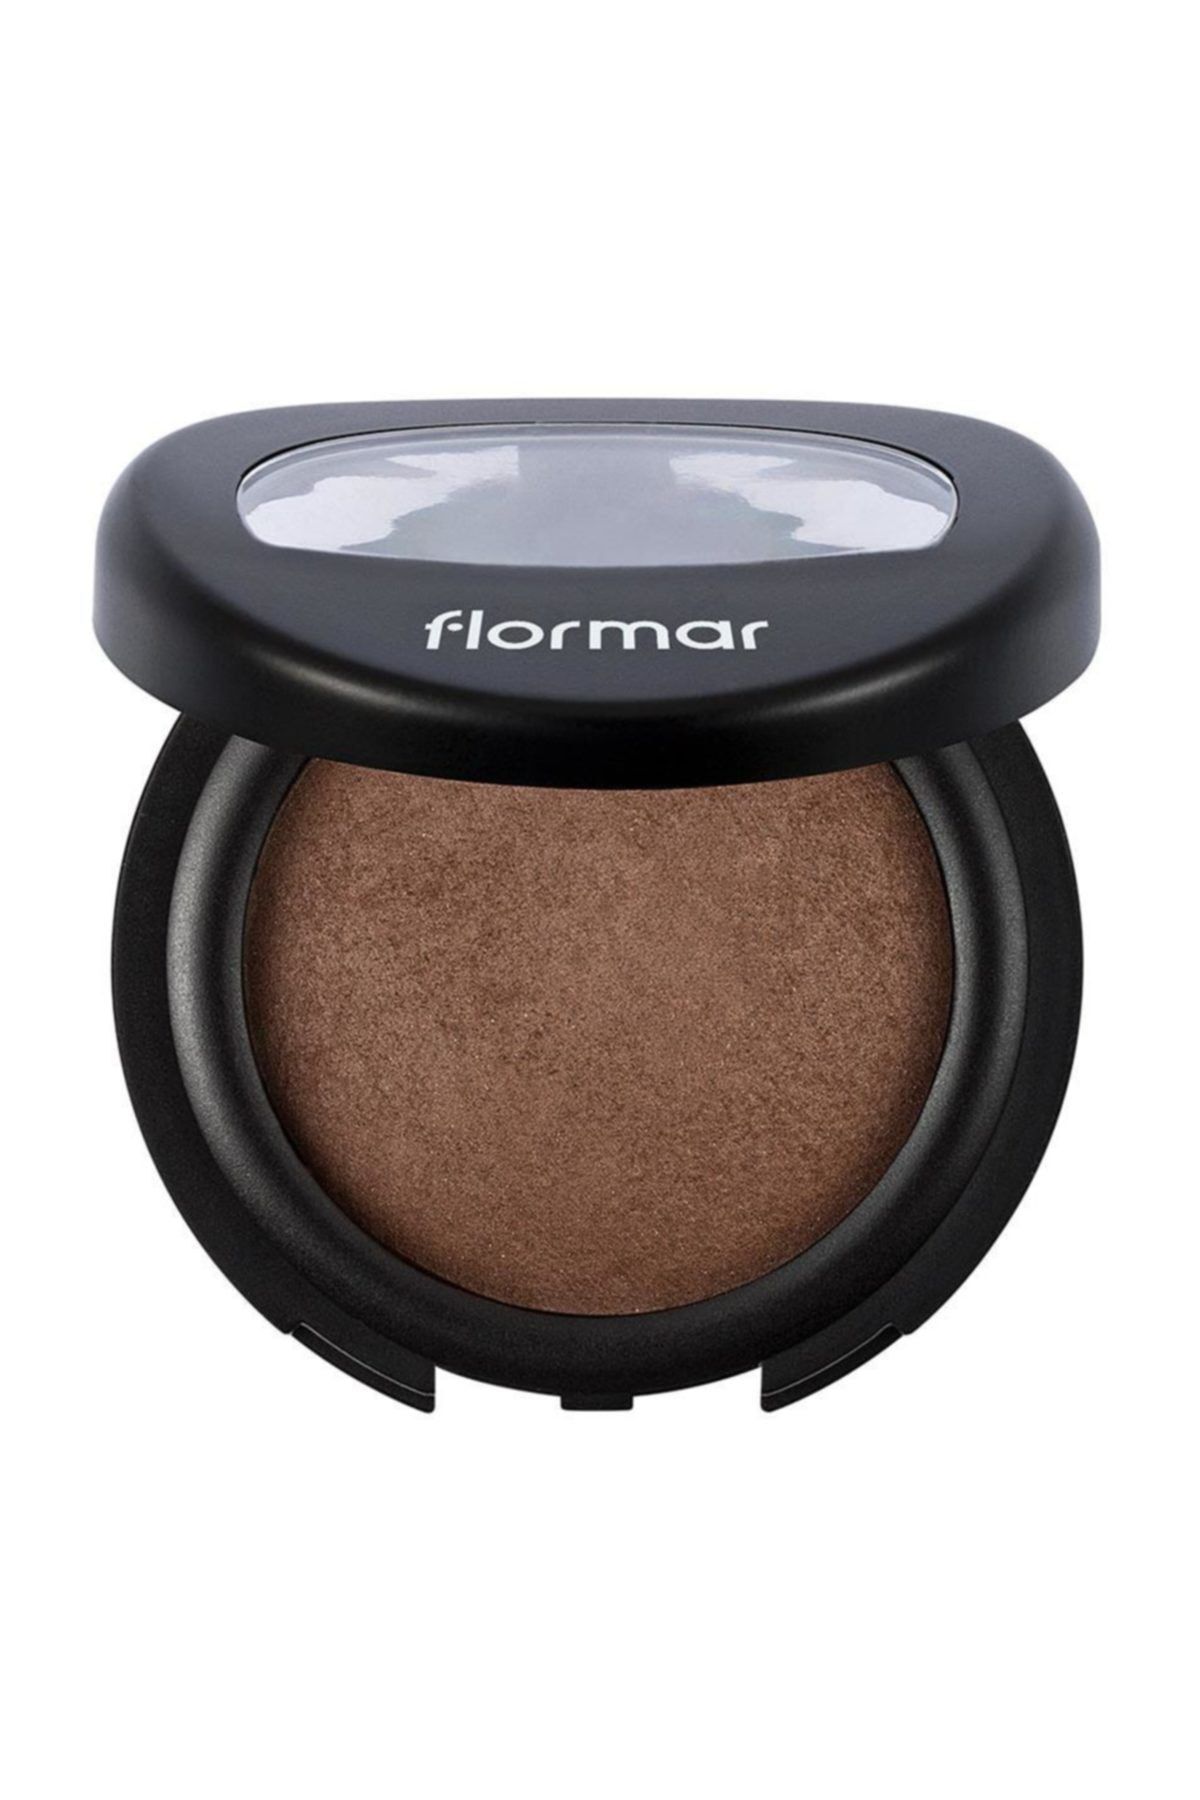 Flormar Kaş Farı - Baked Eyebrow Shadow Brown 02 8690604525843